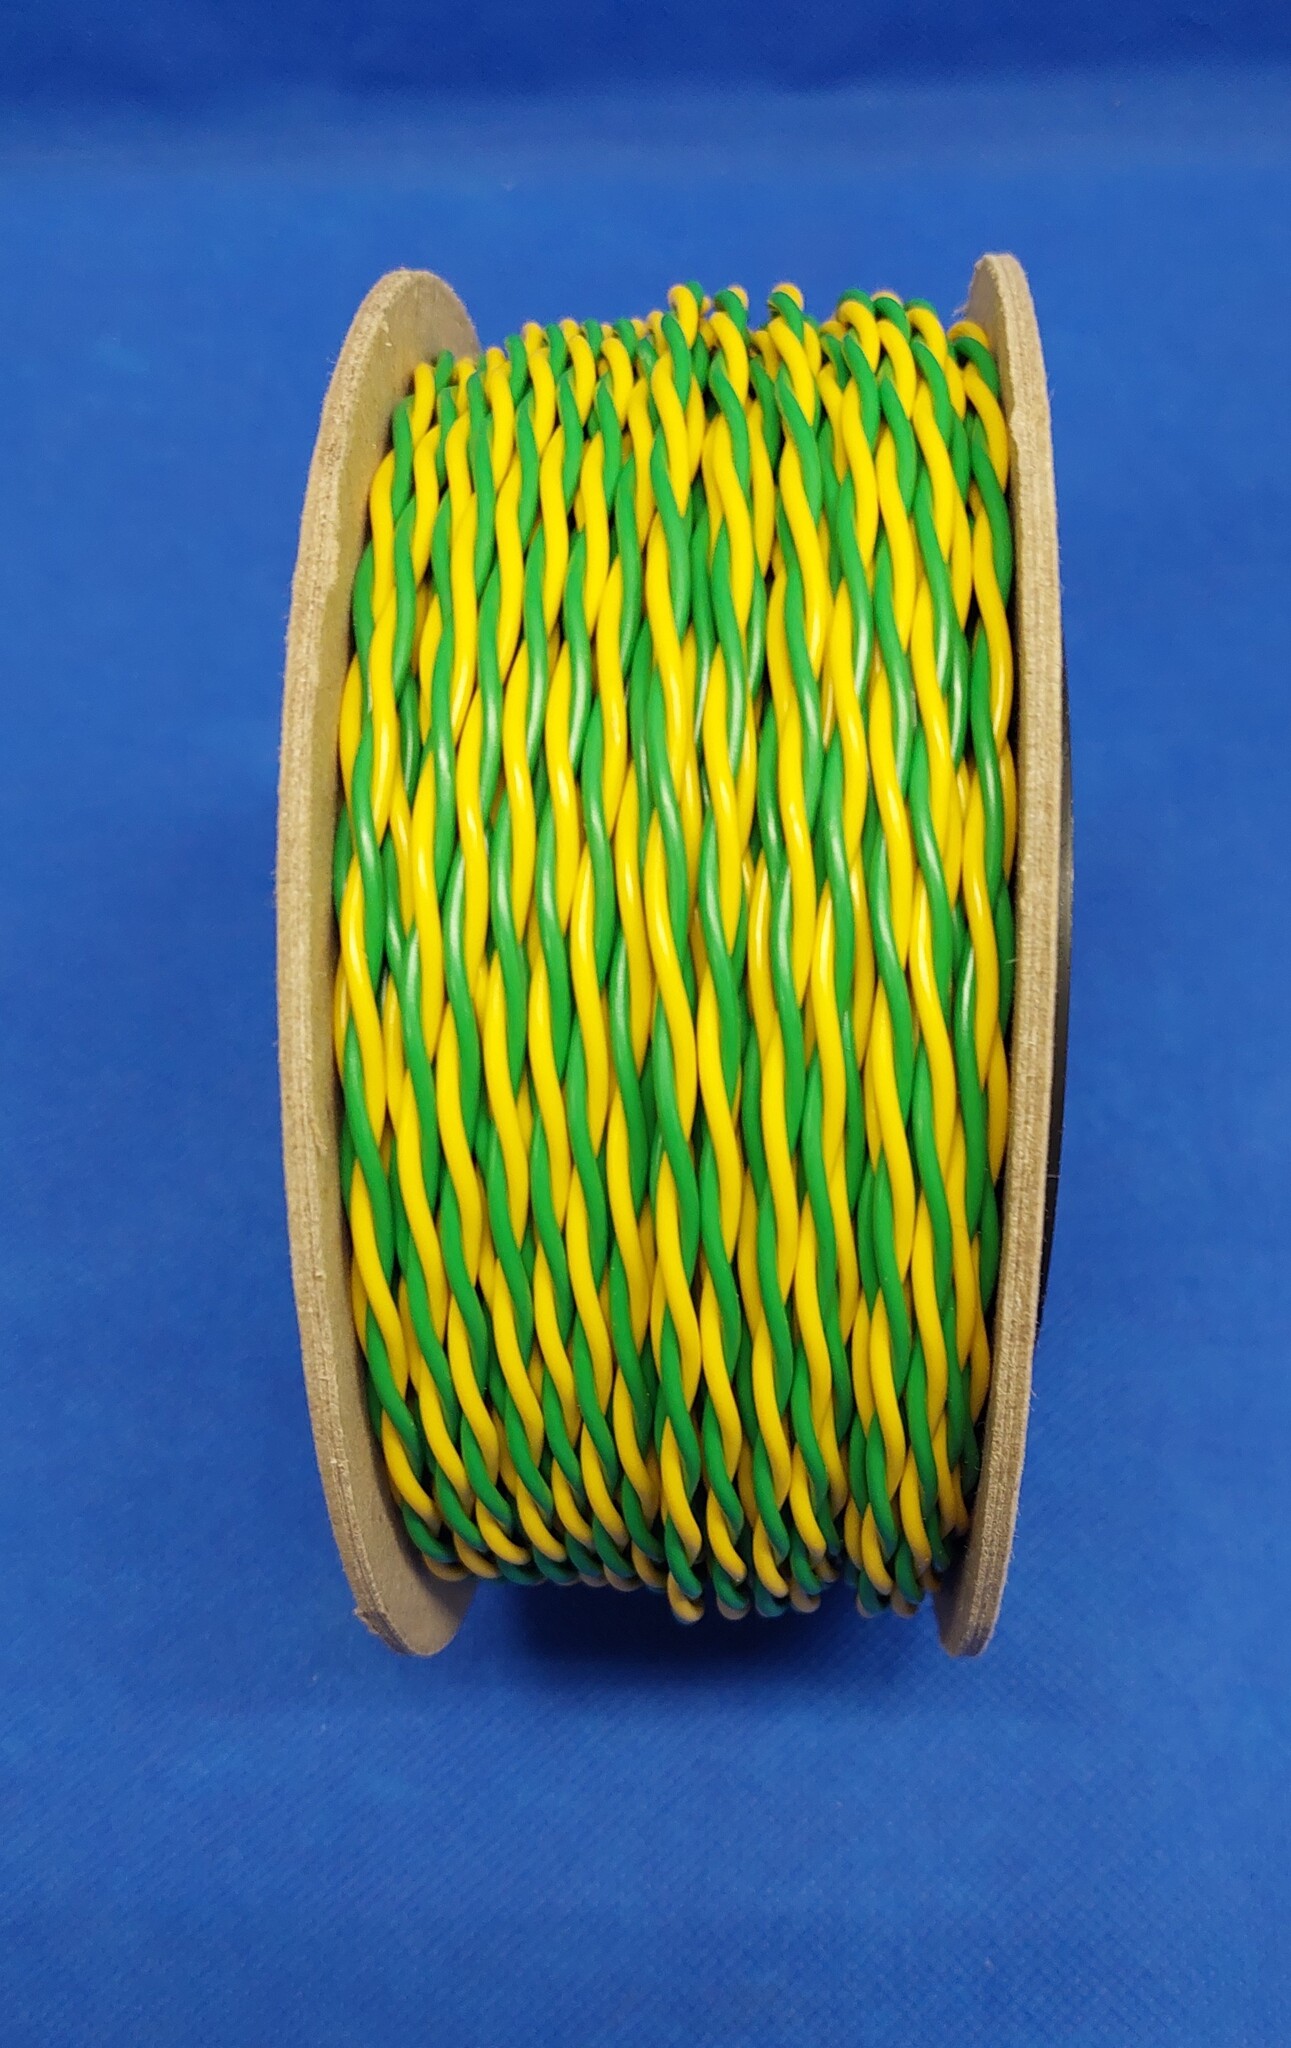 2x 0,75mm2 Twisted Pair FLRY-B kabel - Can Bus kabel - 50 meter op rol 